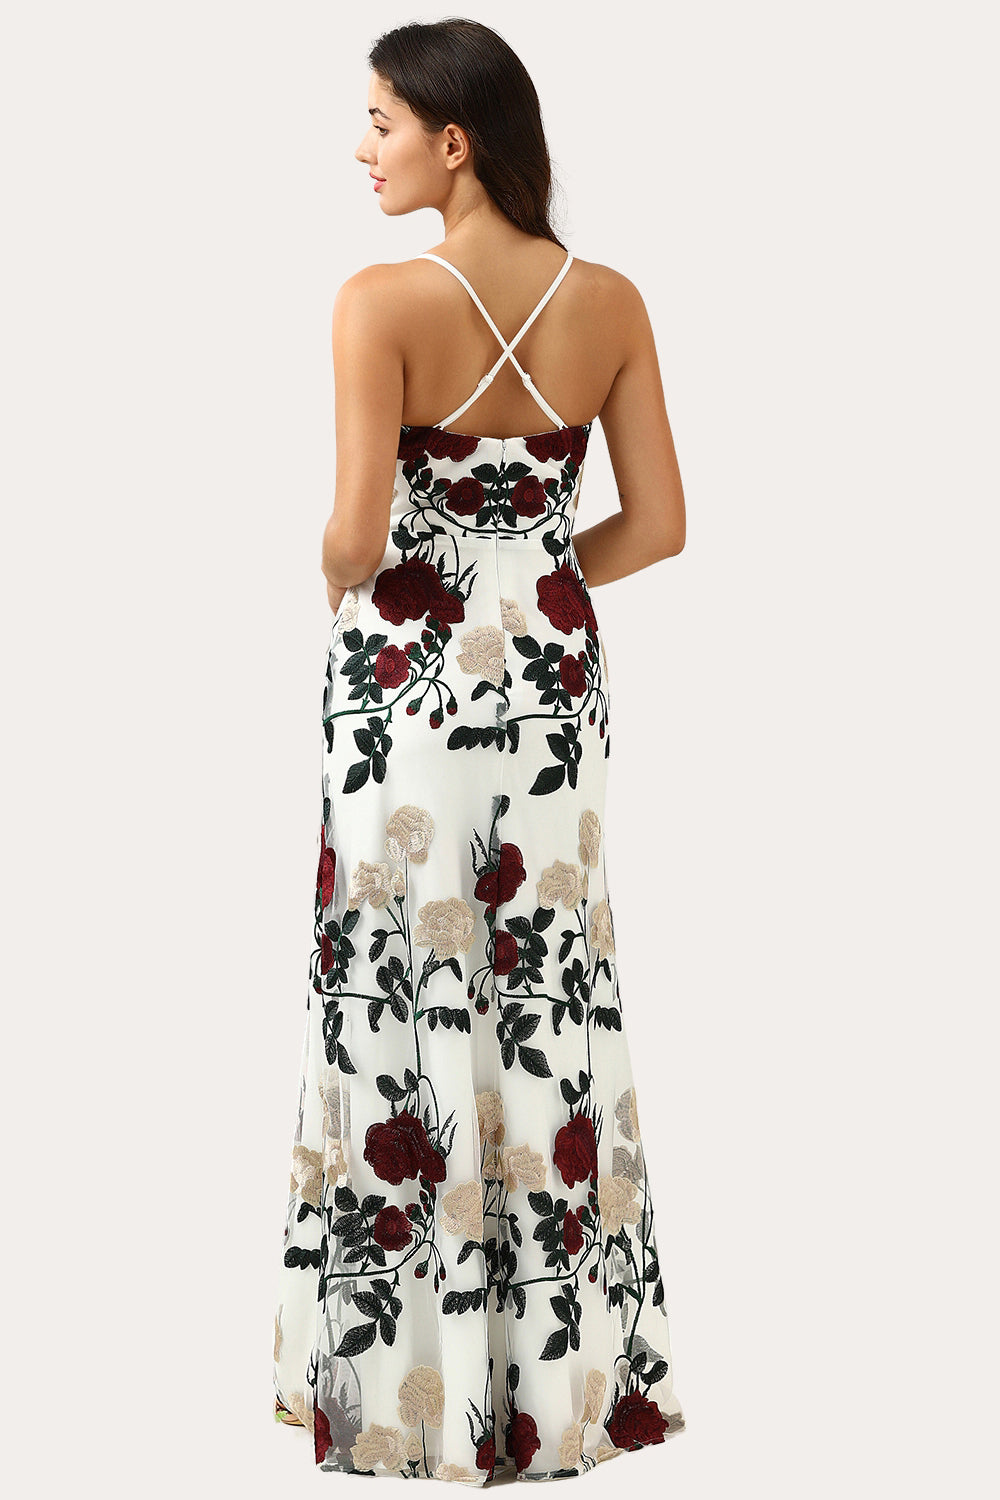 Rose Flower Embroidery White Strap Deep V-neck Bridesmaid Dress